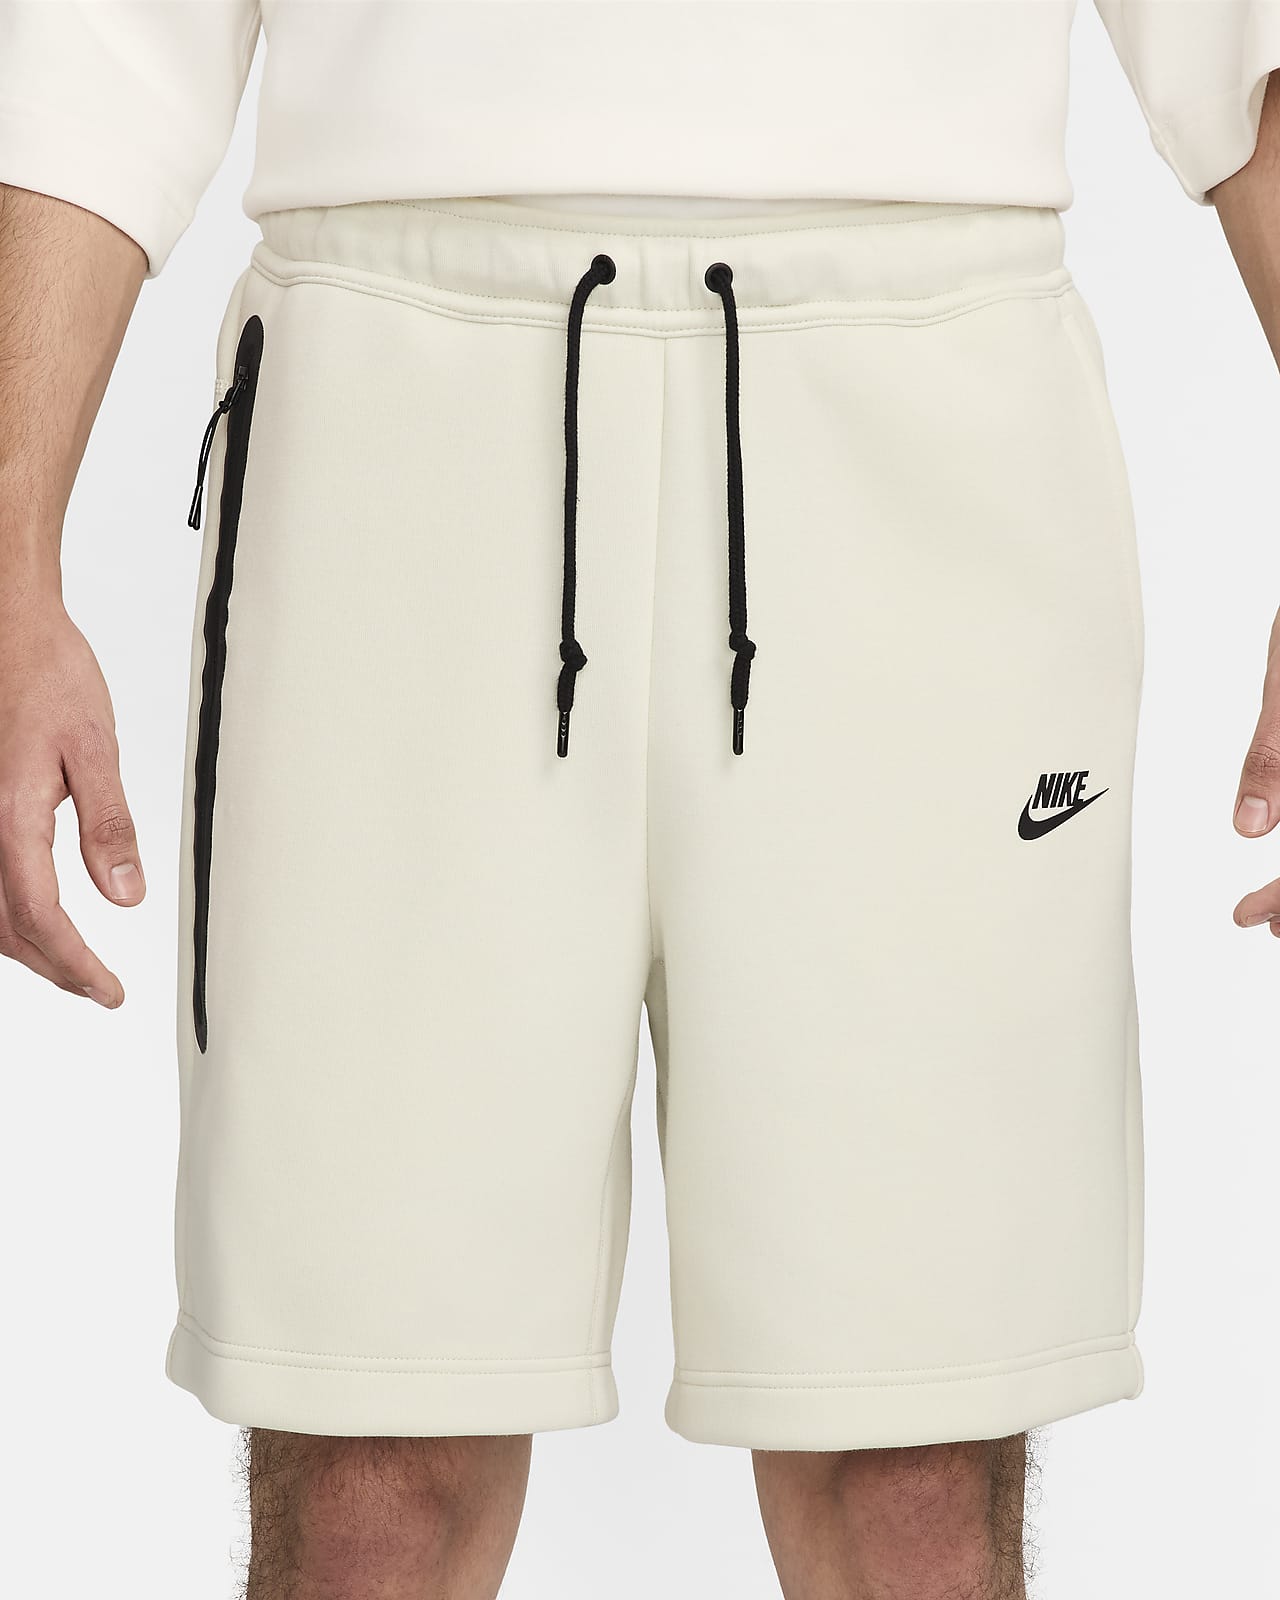 Nike Tech Fleece shorts in gray